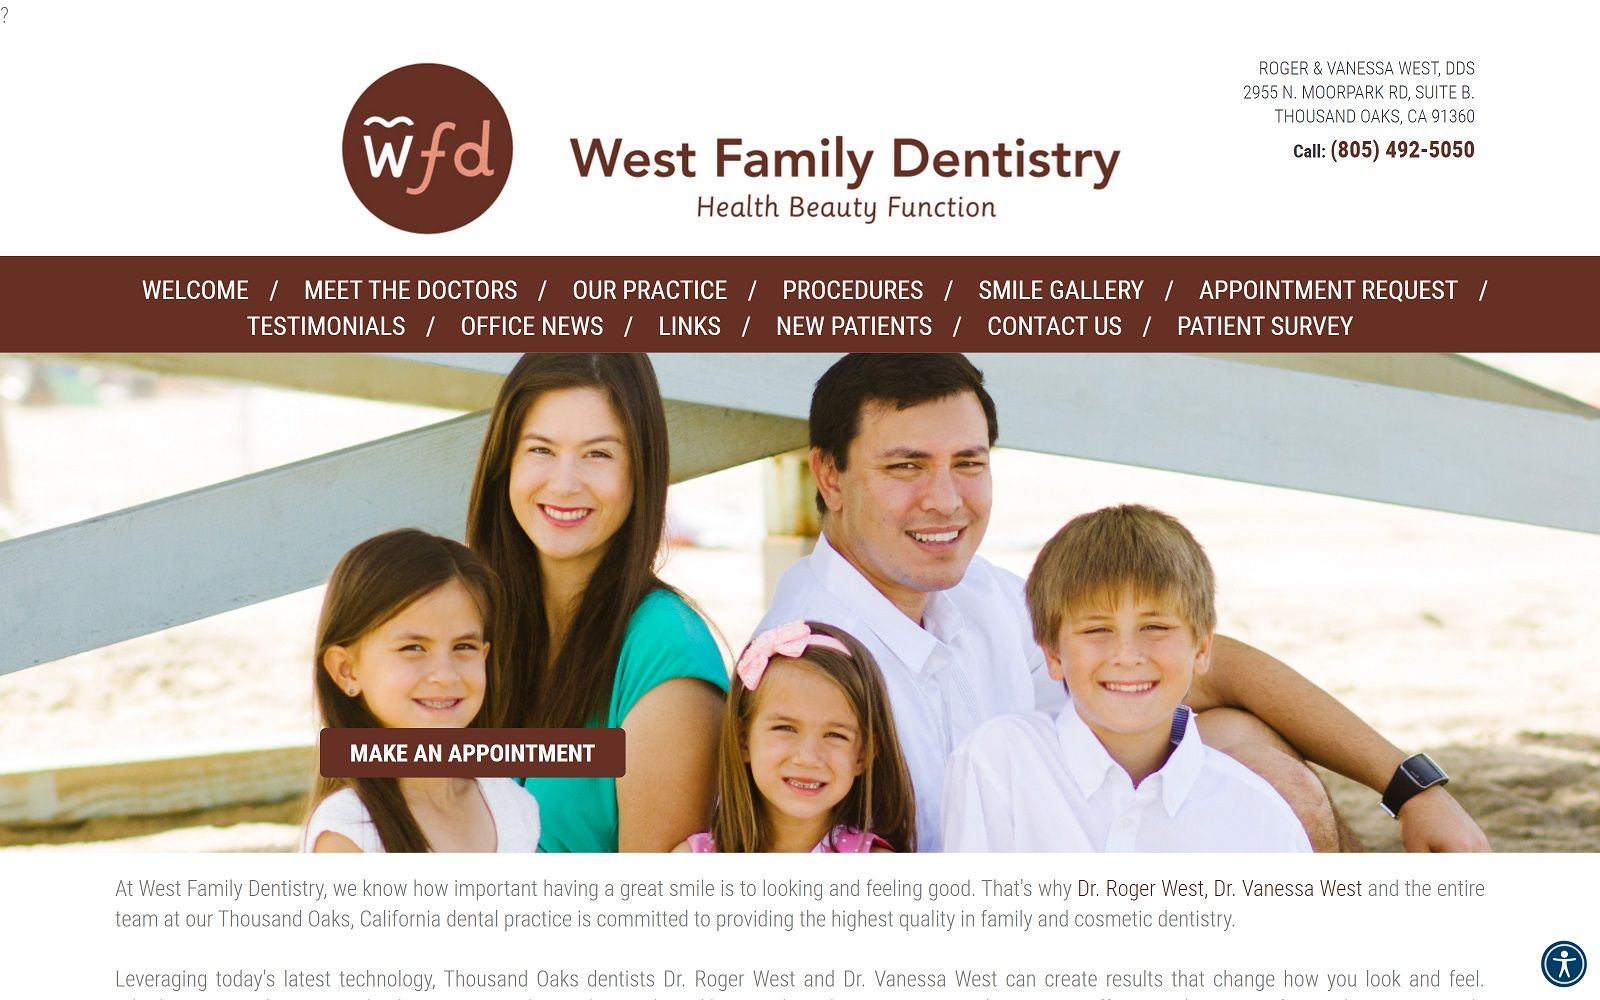 westfamilydentistry.net-screenshot